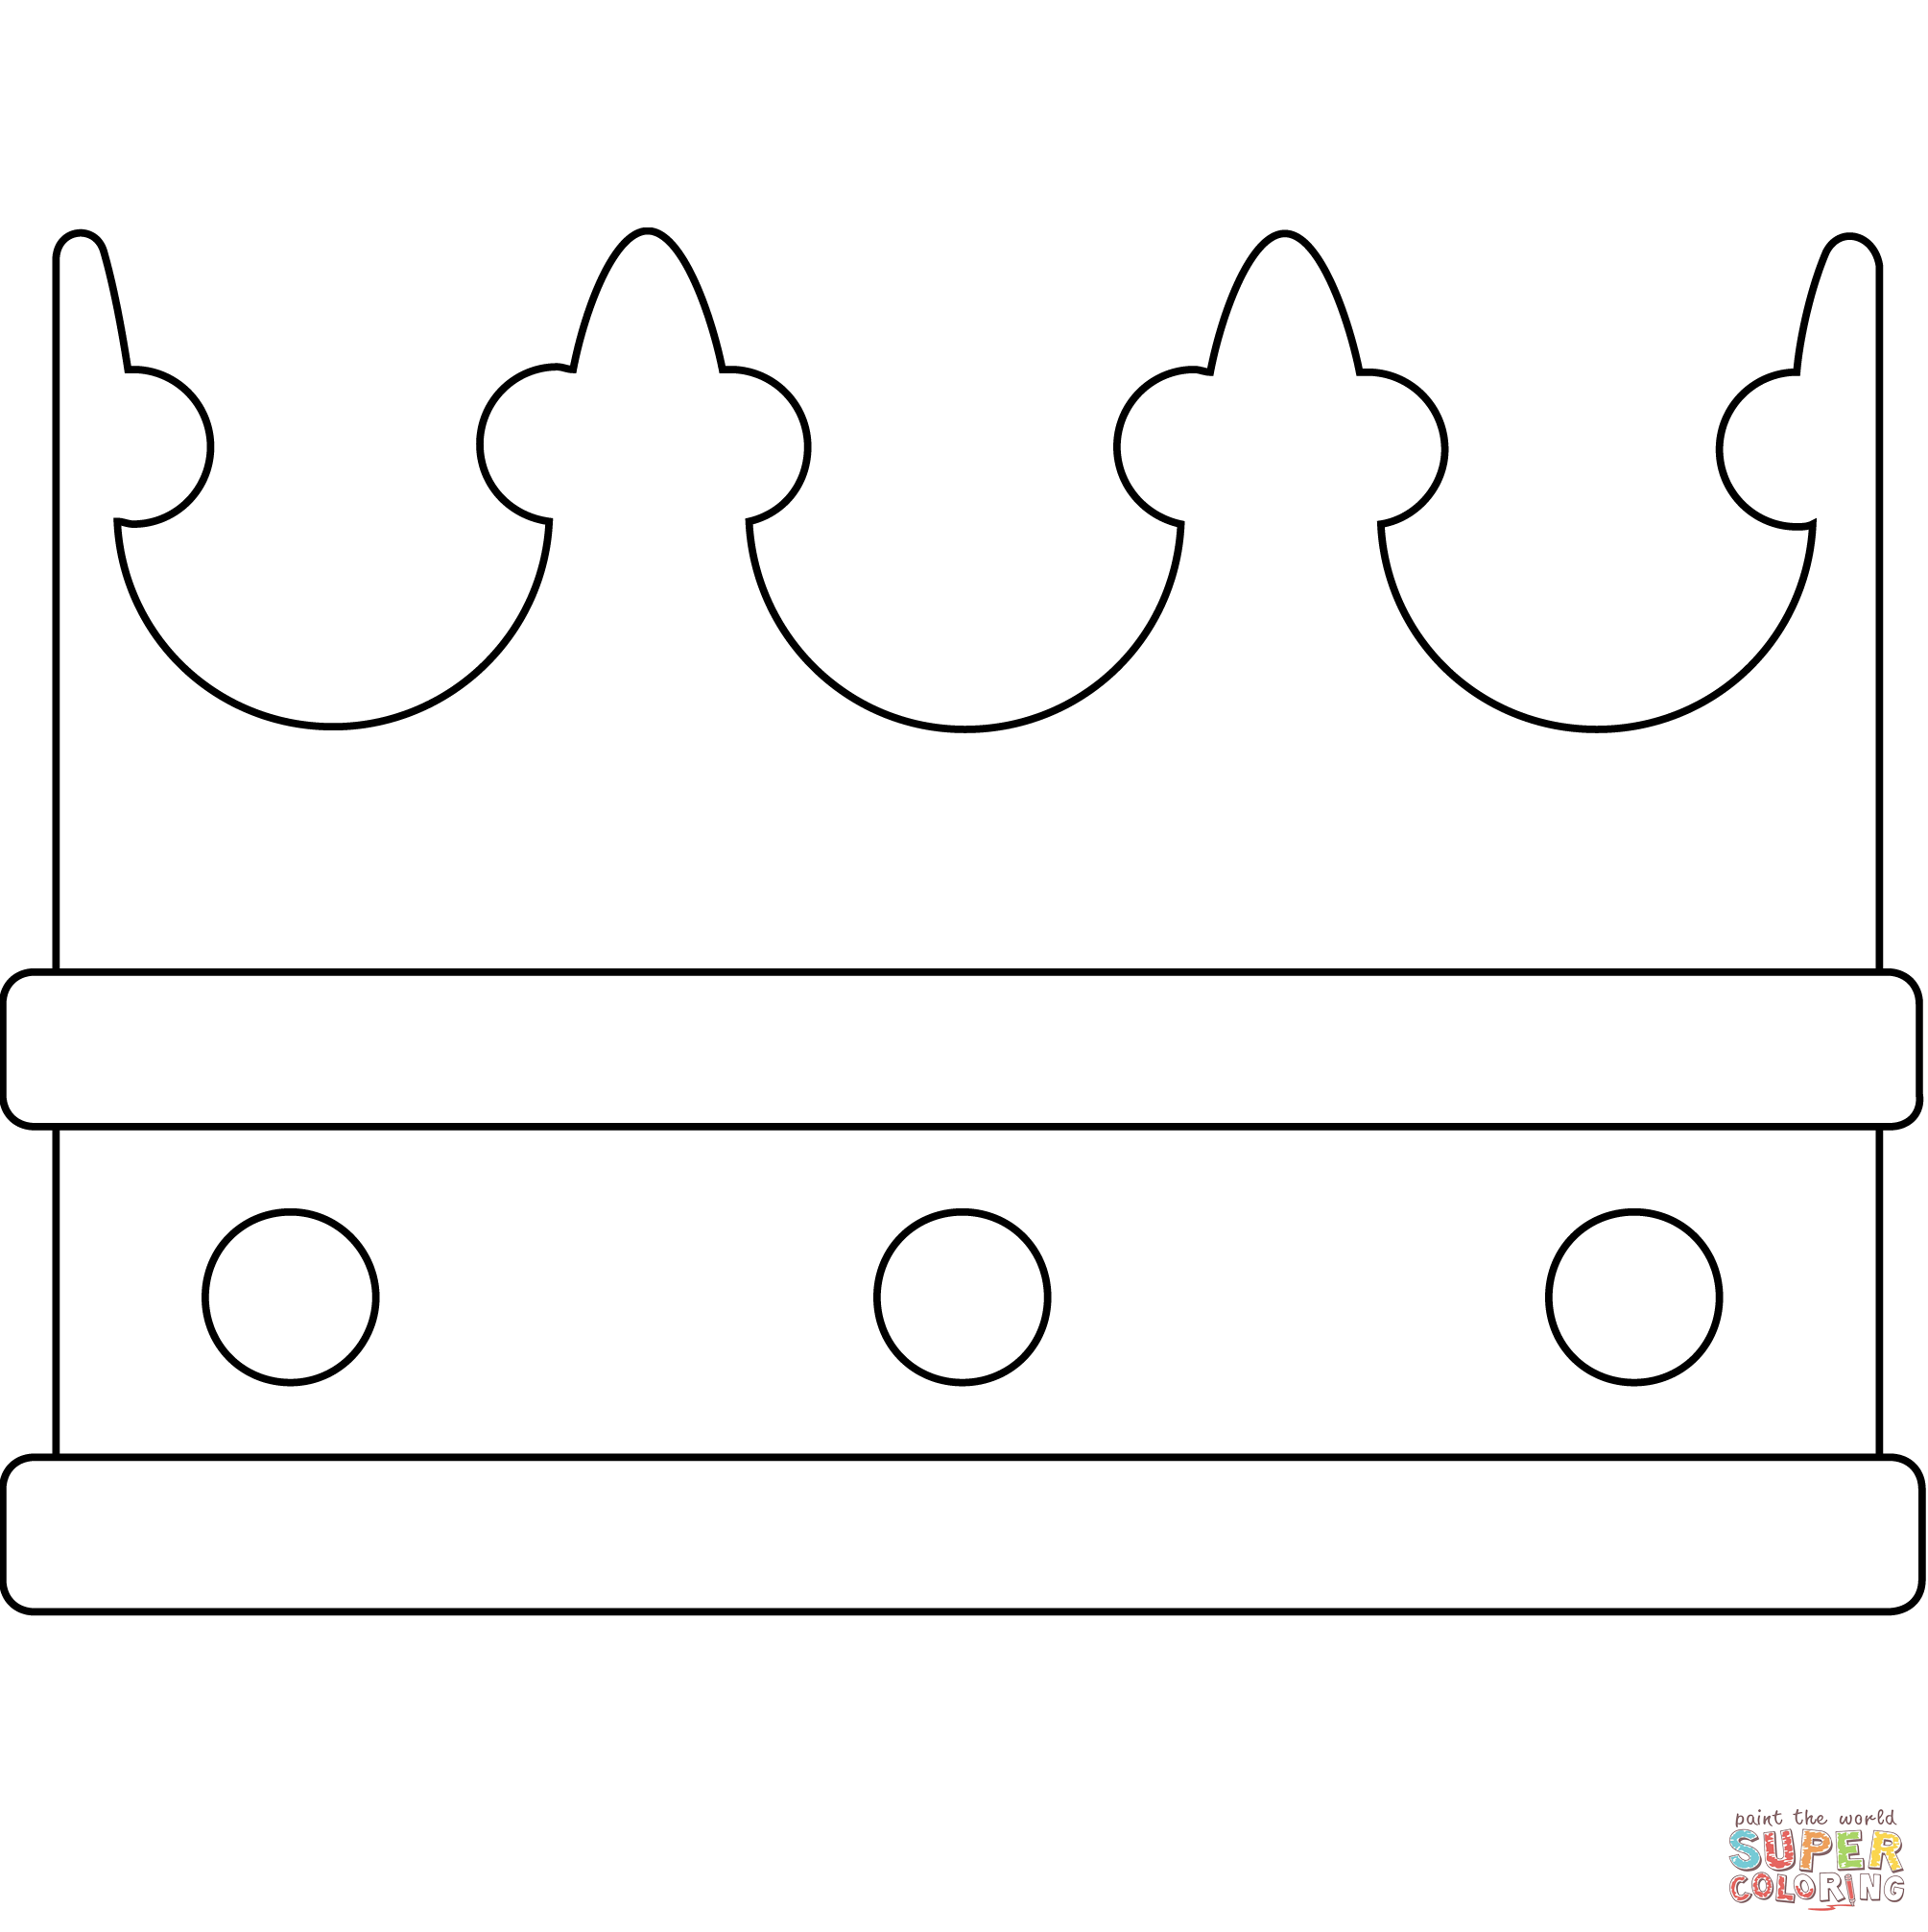 Crown emoji coloring page free printable coloring pages